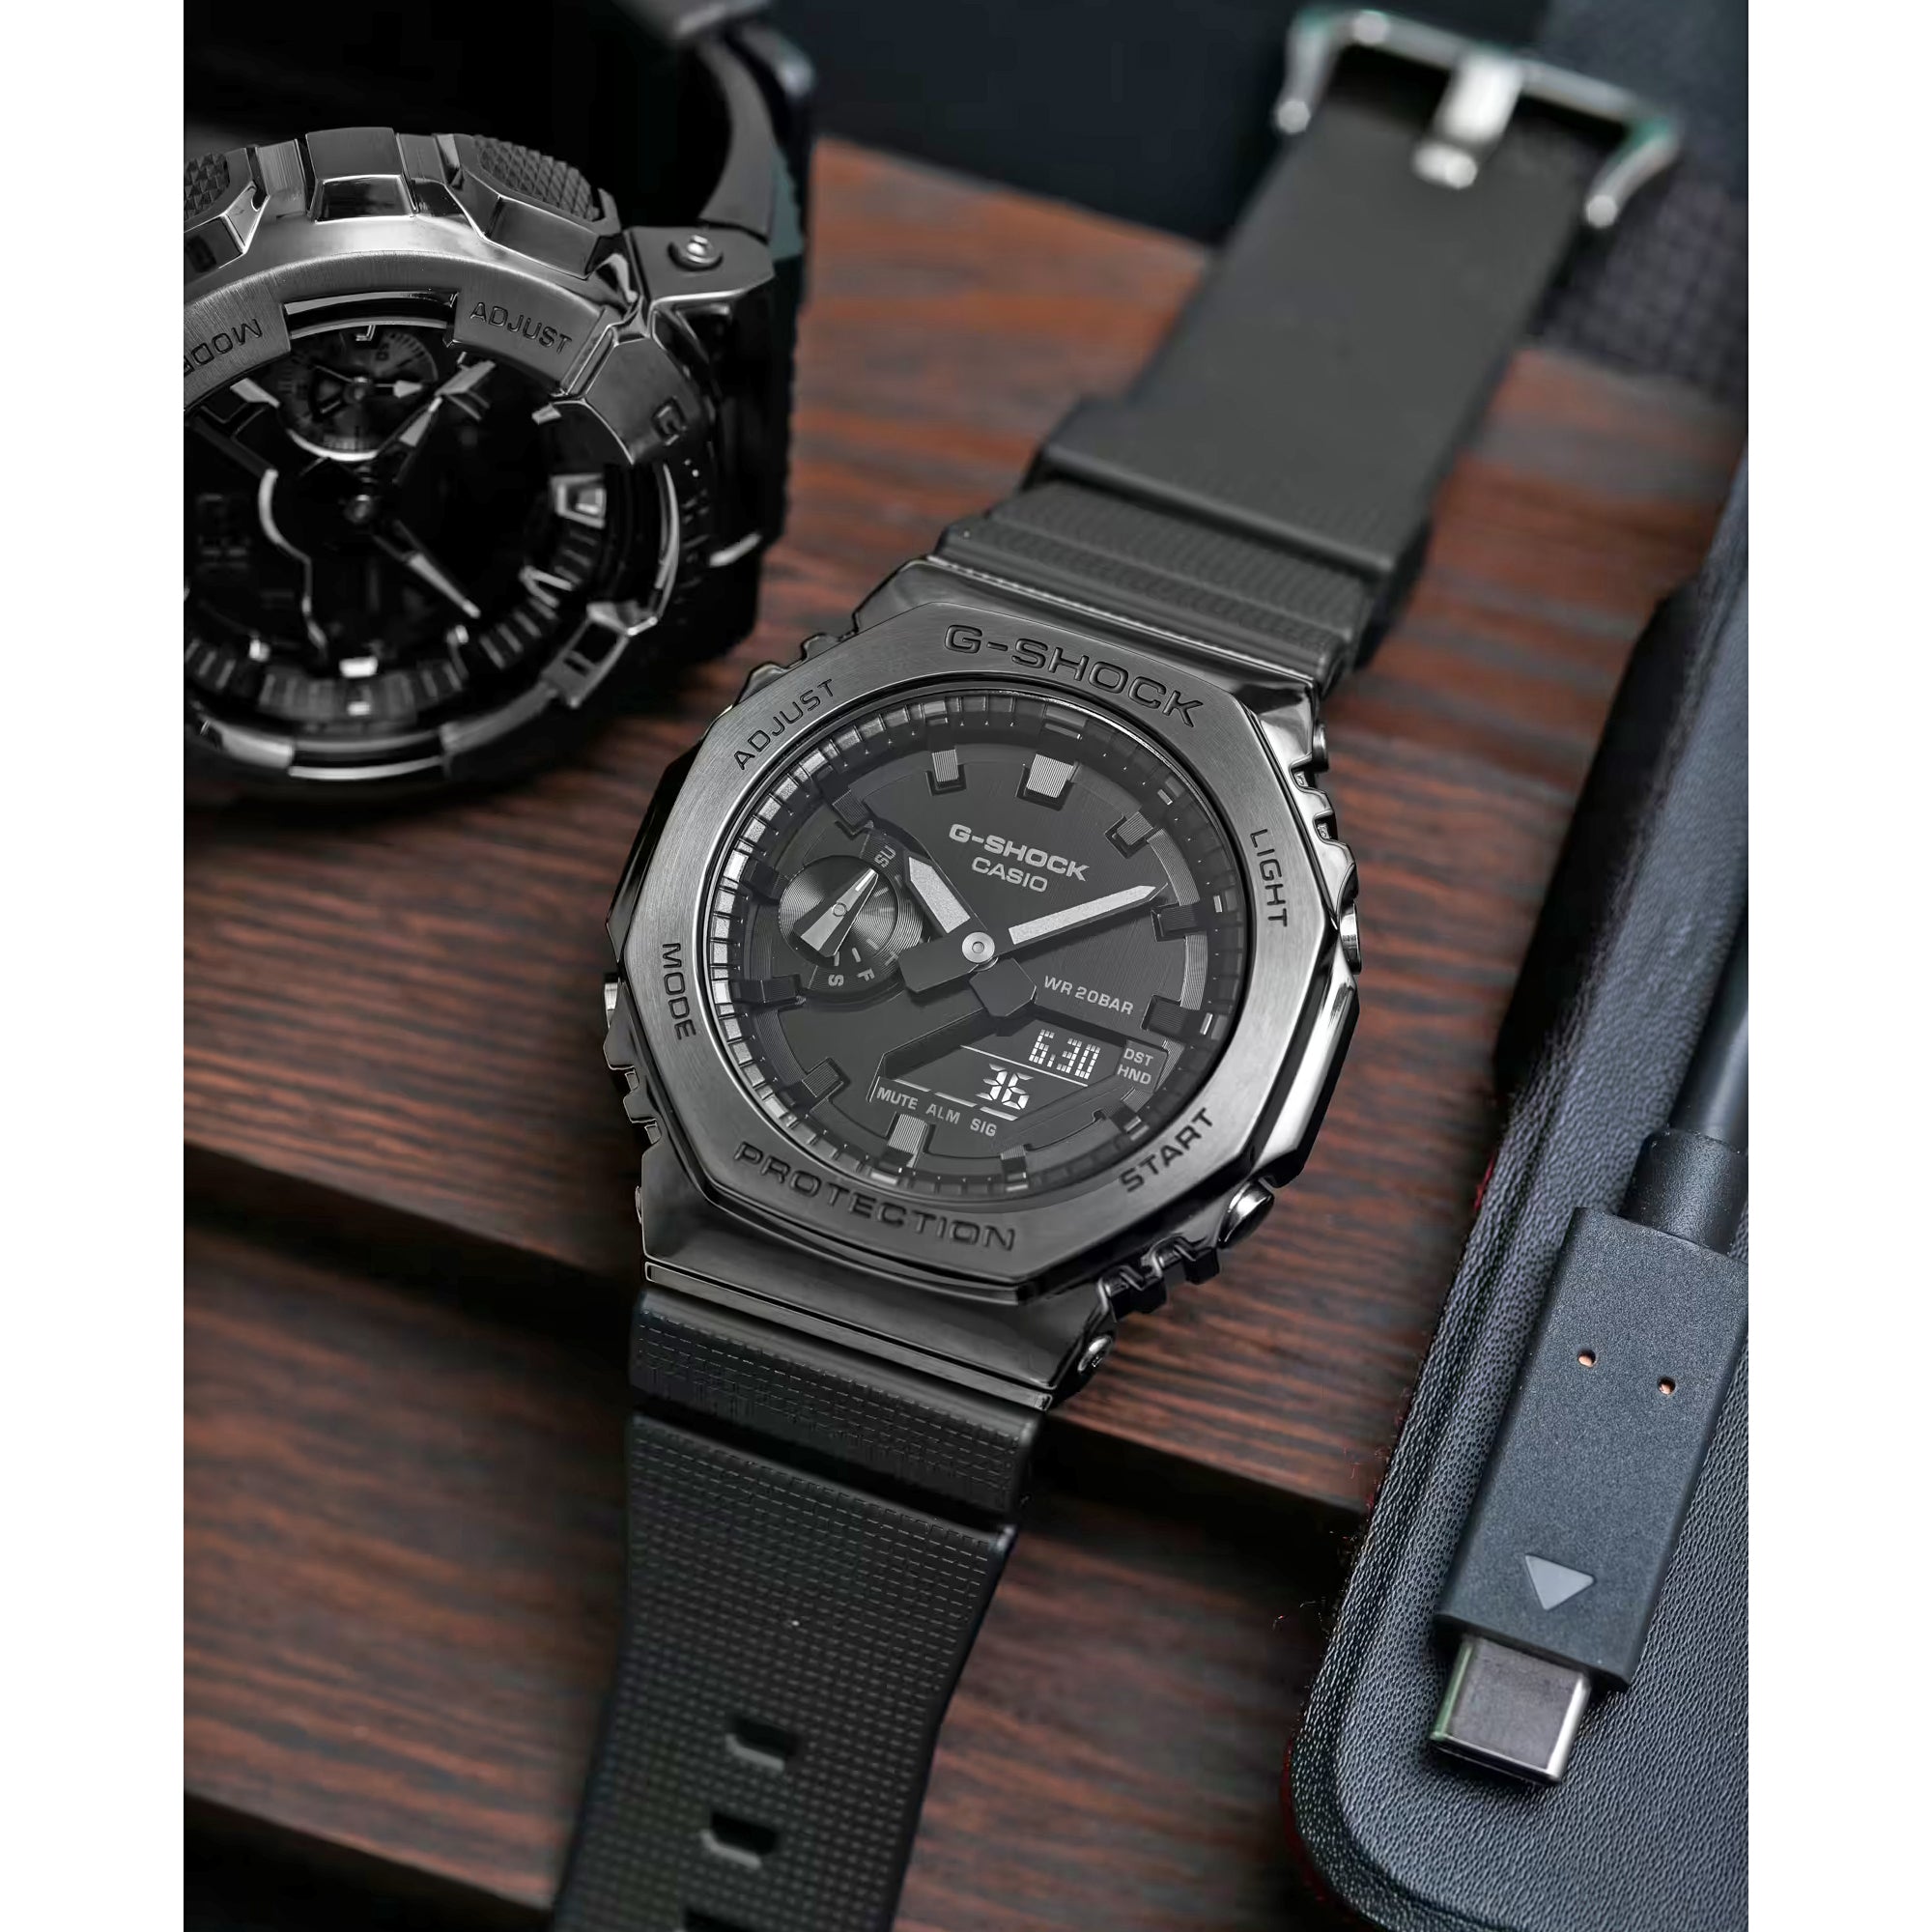 NAGI GM2100BB-1A Casio Series CasiOak GM2100 Watch – Black-on-Black G-Shock